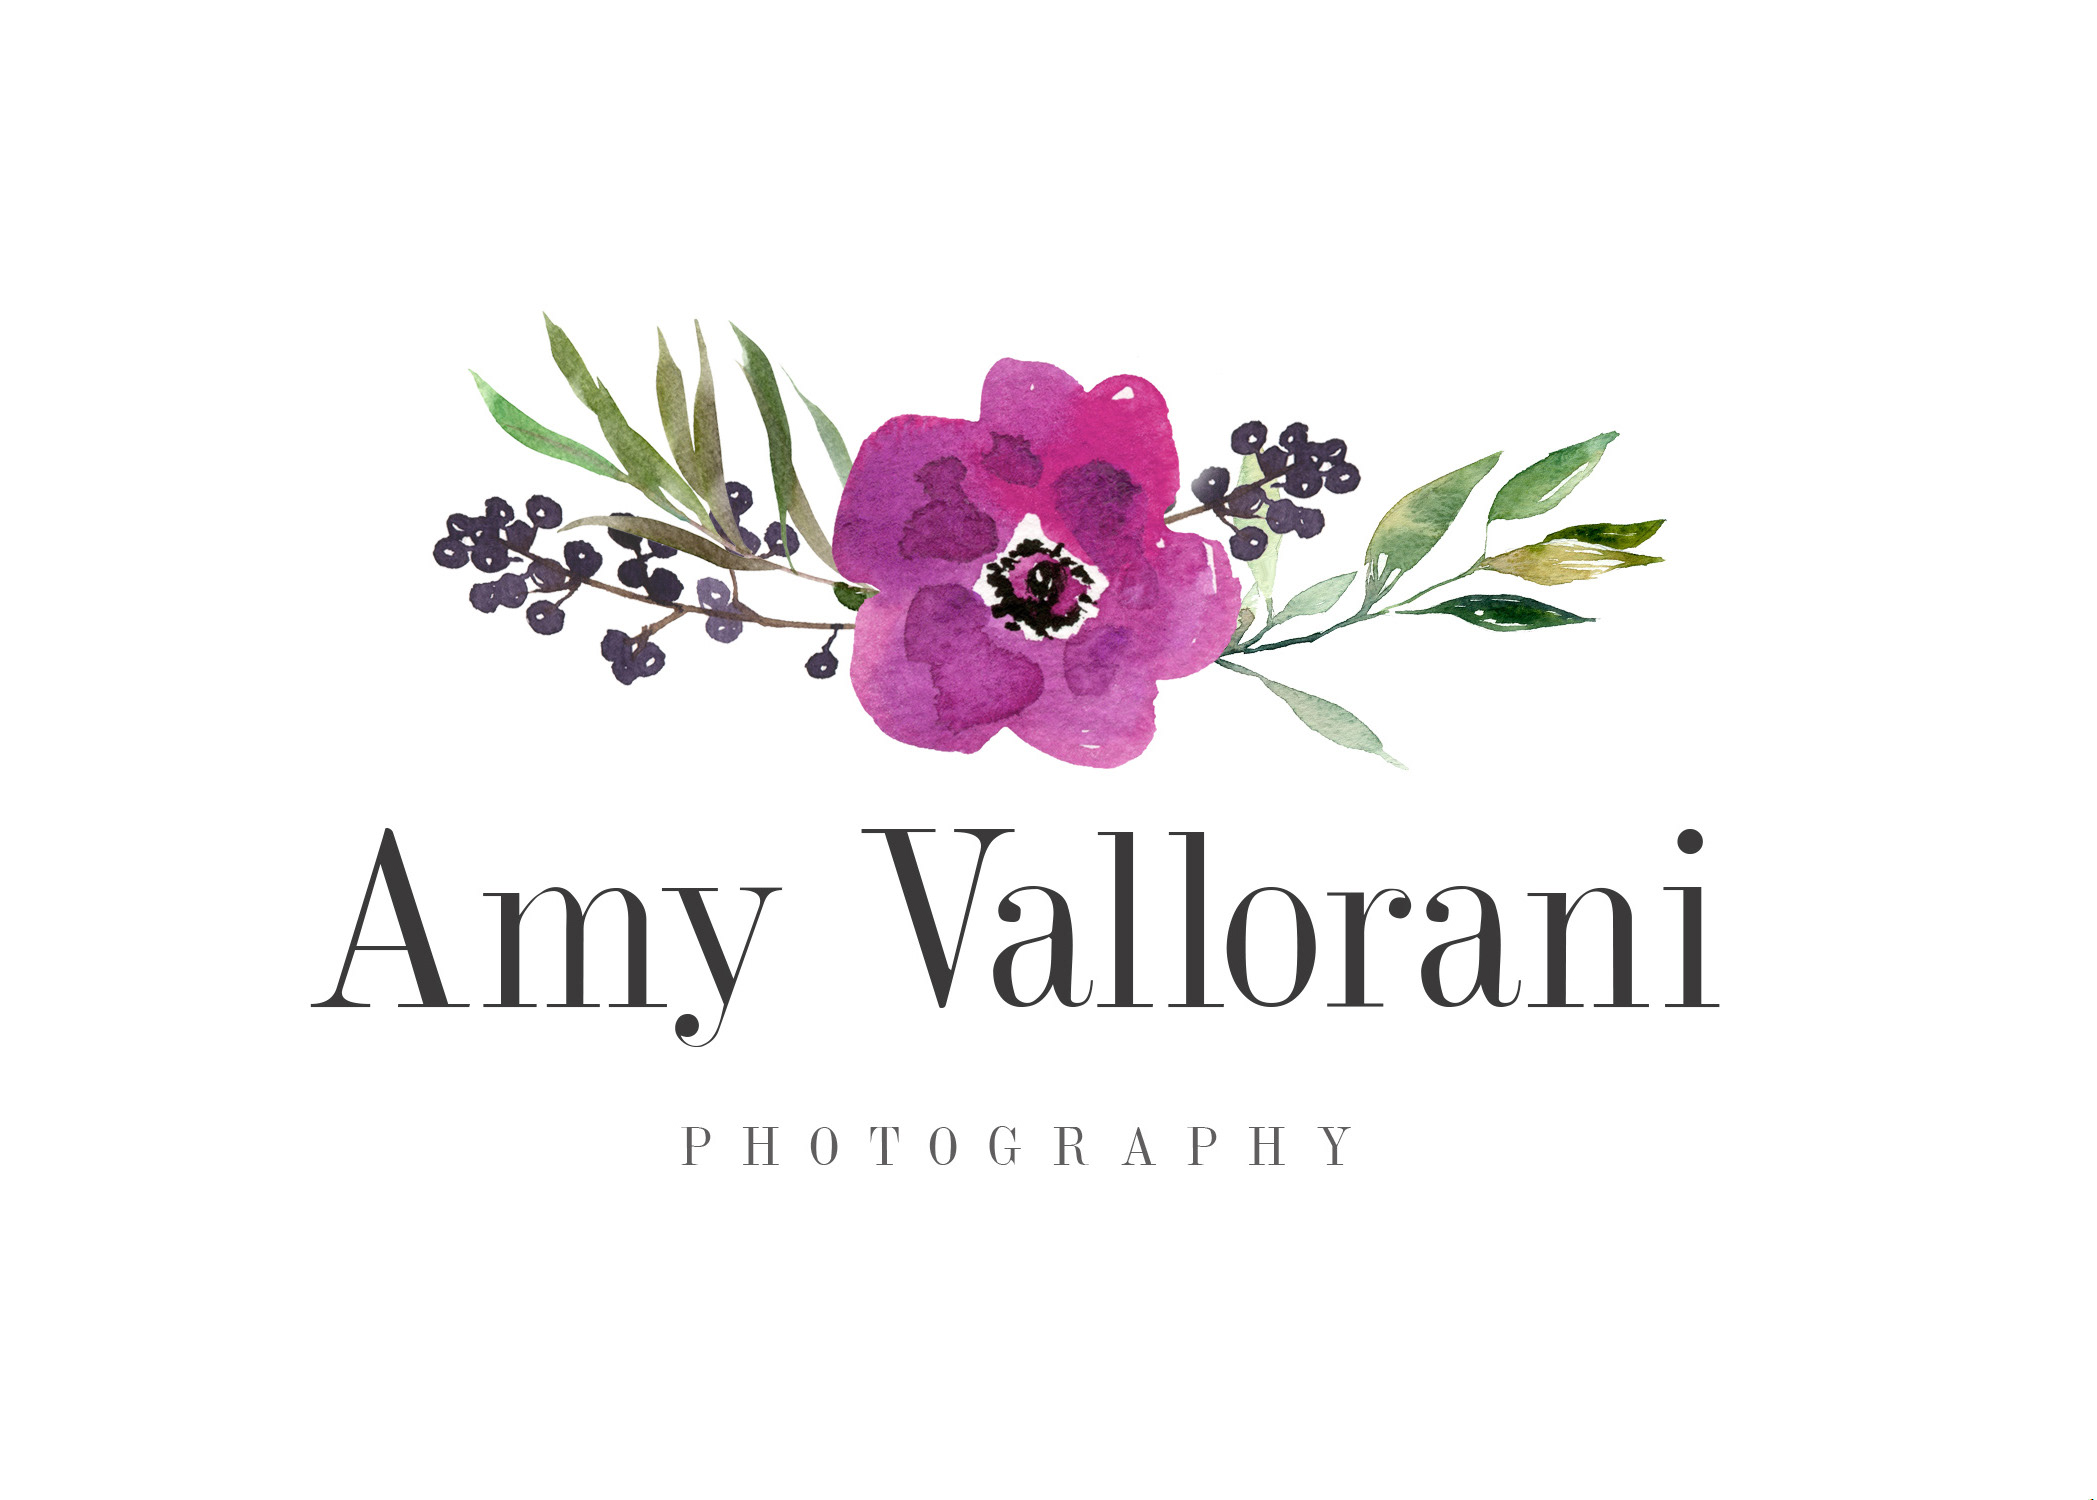 Amy Vallorani